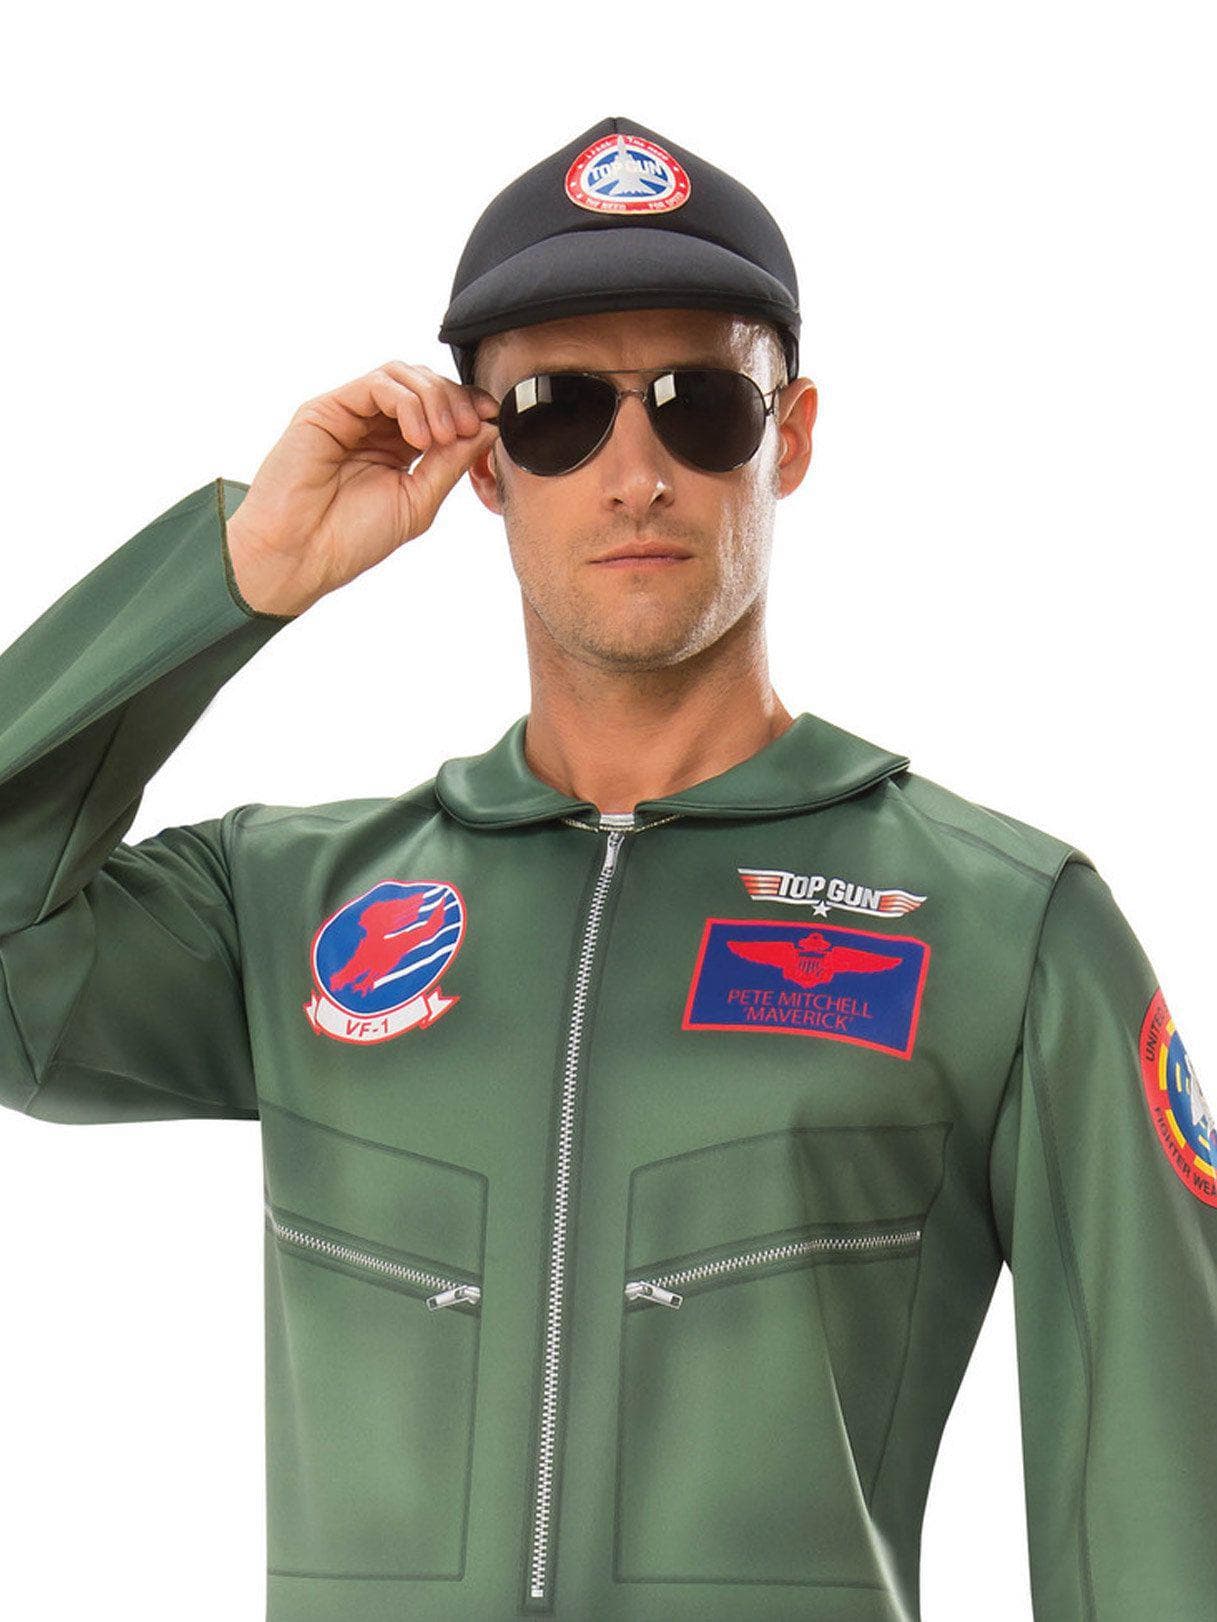 Top Gun Aviator Sunglasses - costumes.com